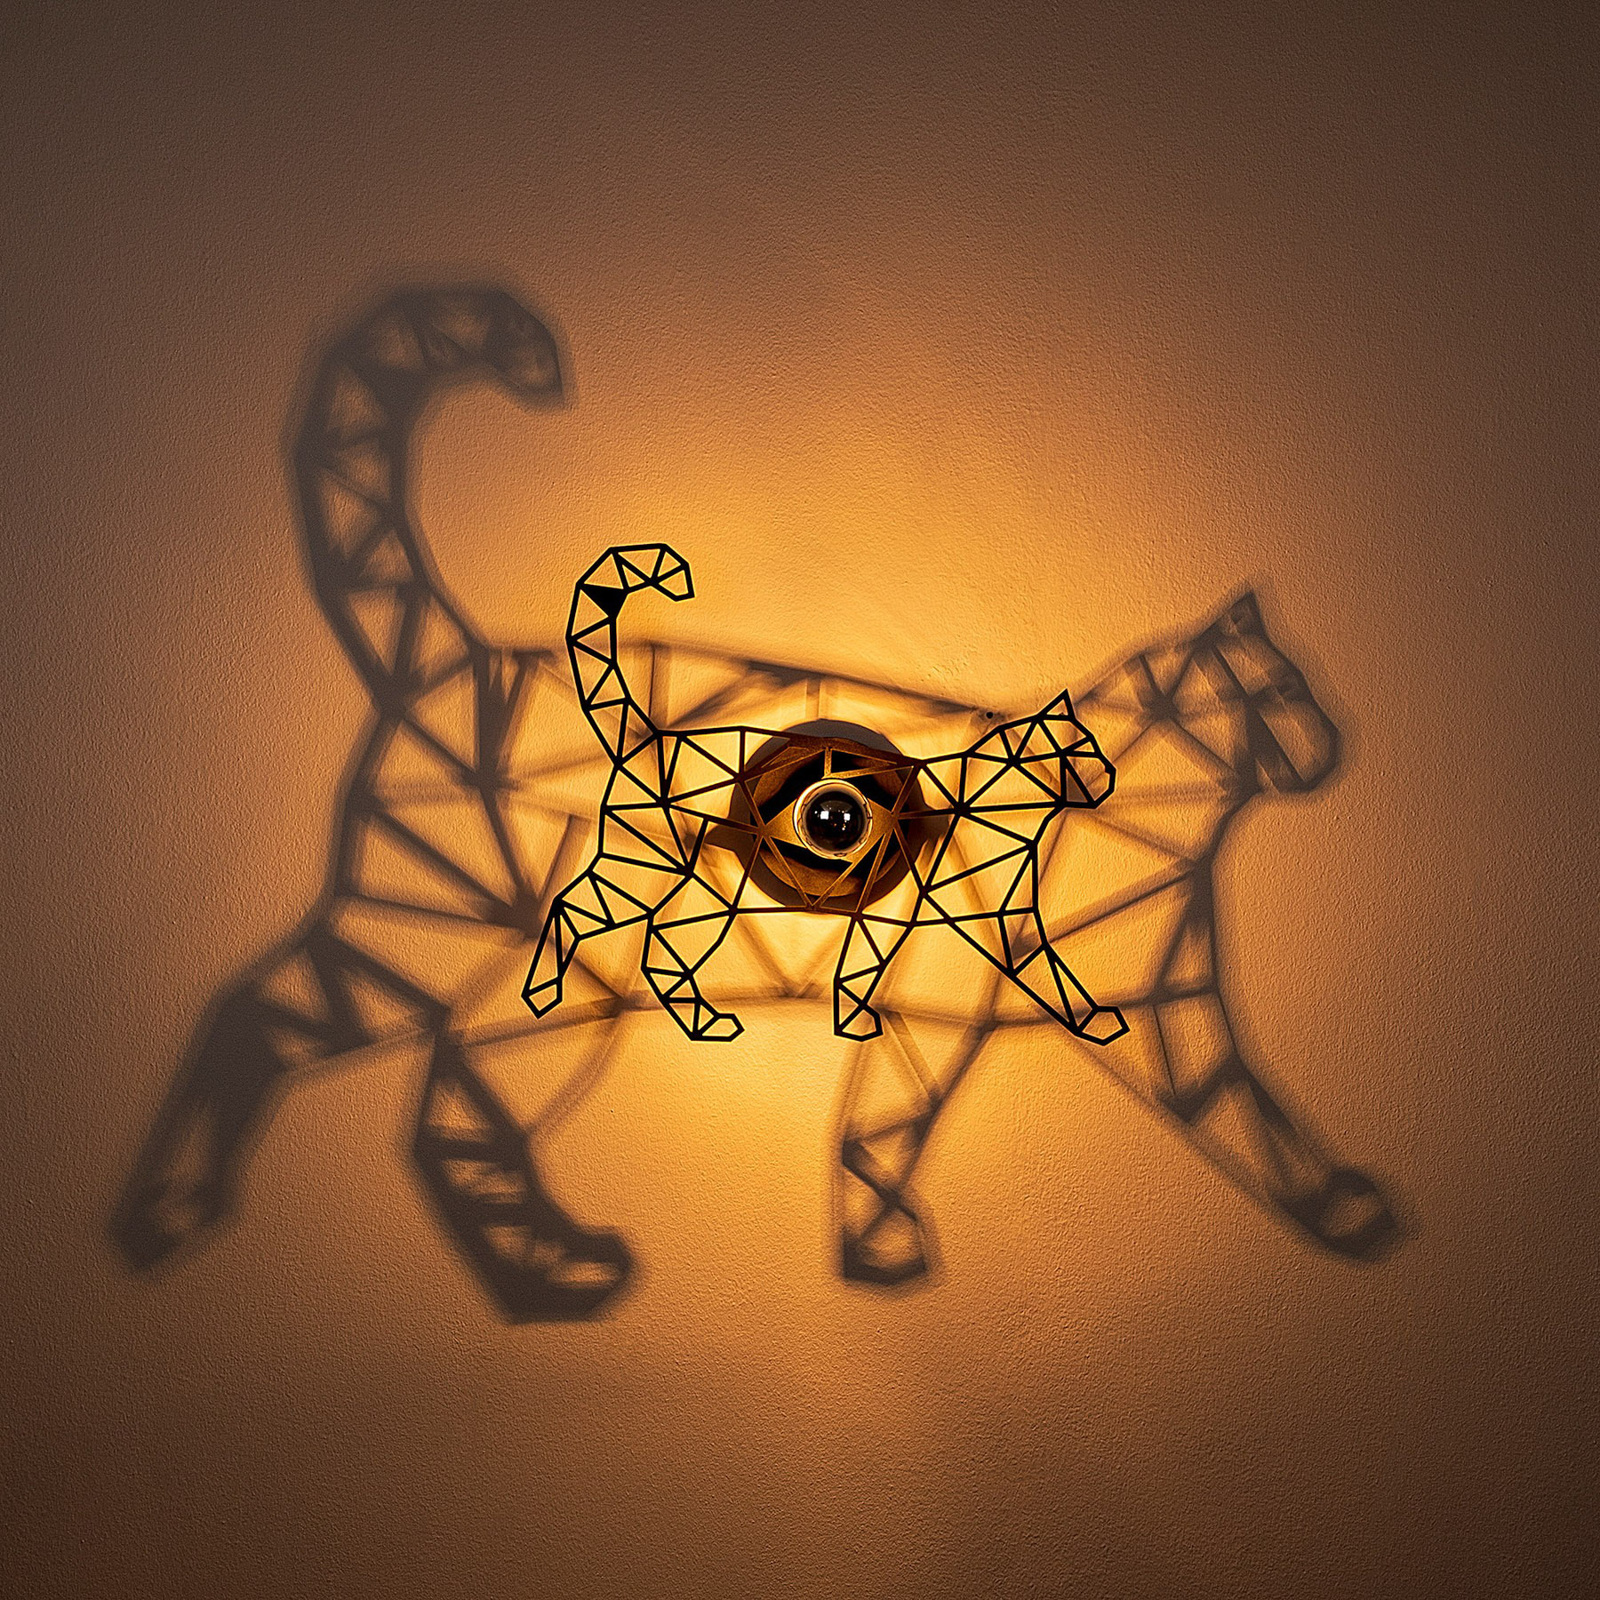 W-041 wall lamp, laser-cut, black cat design